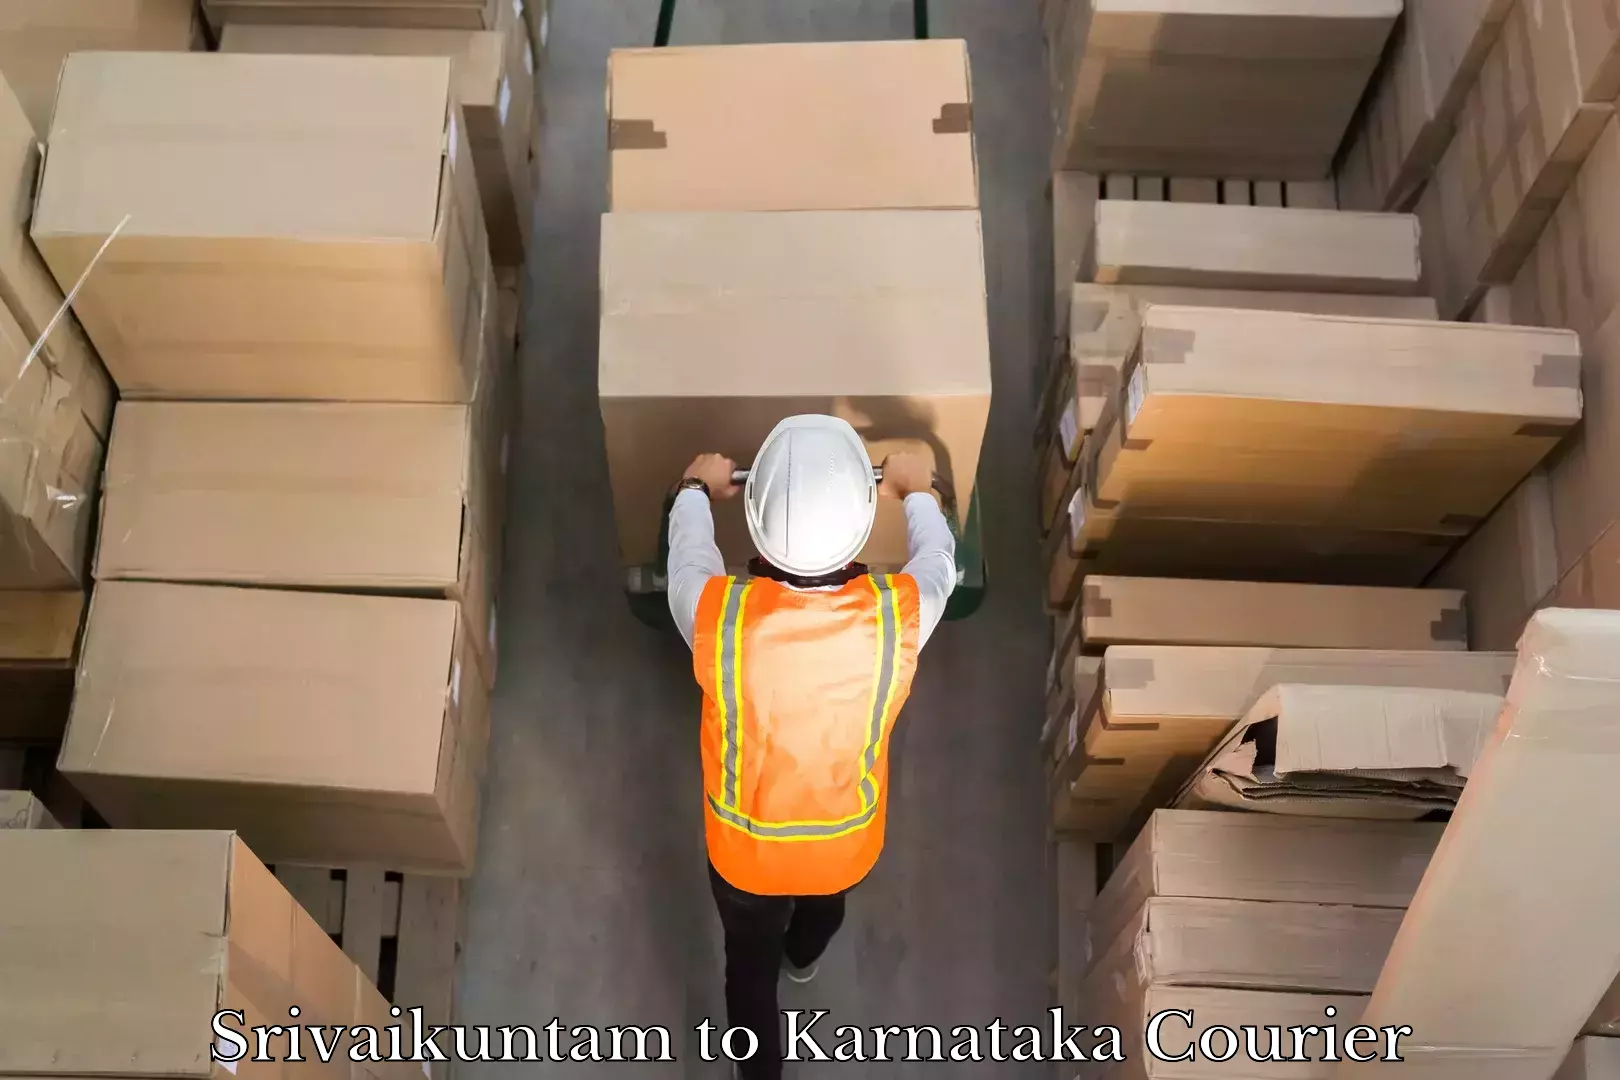 International courier networks Srivaikuntam to Karnataka